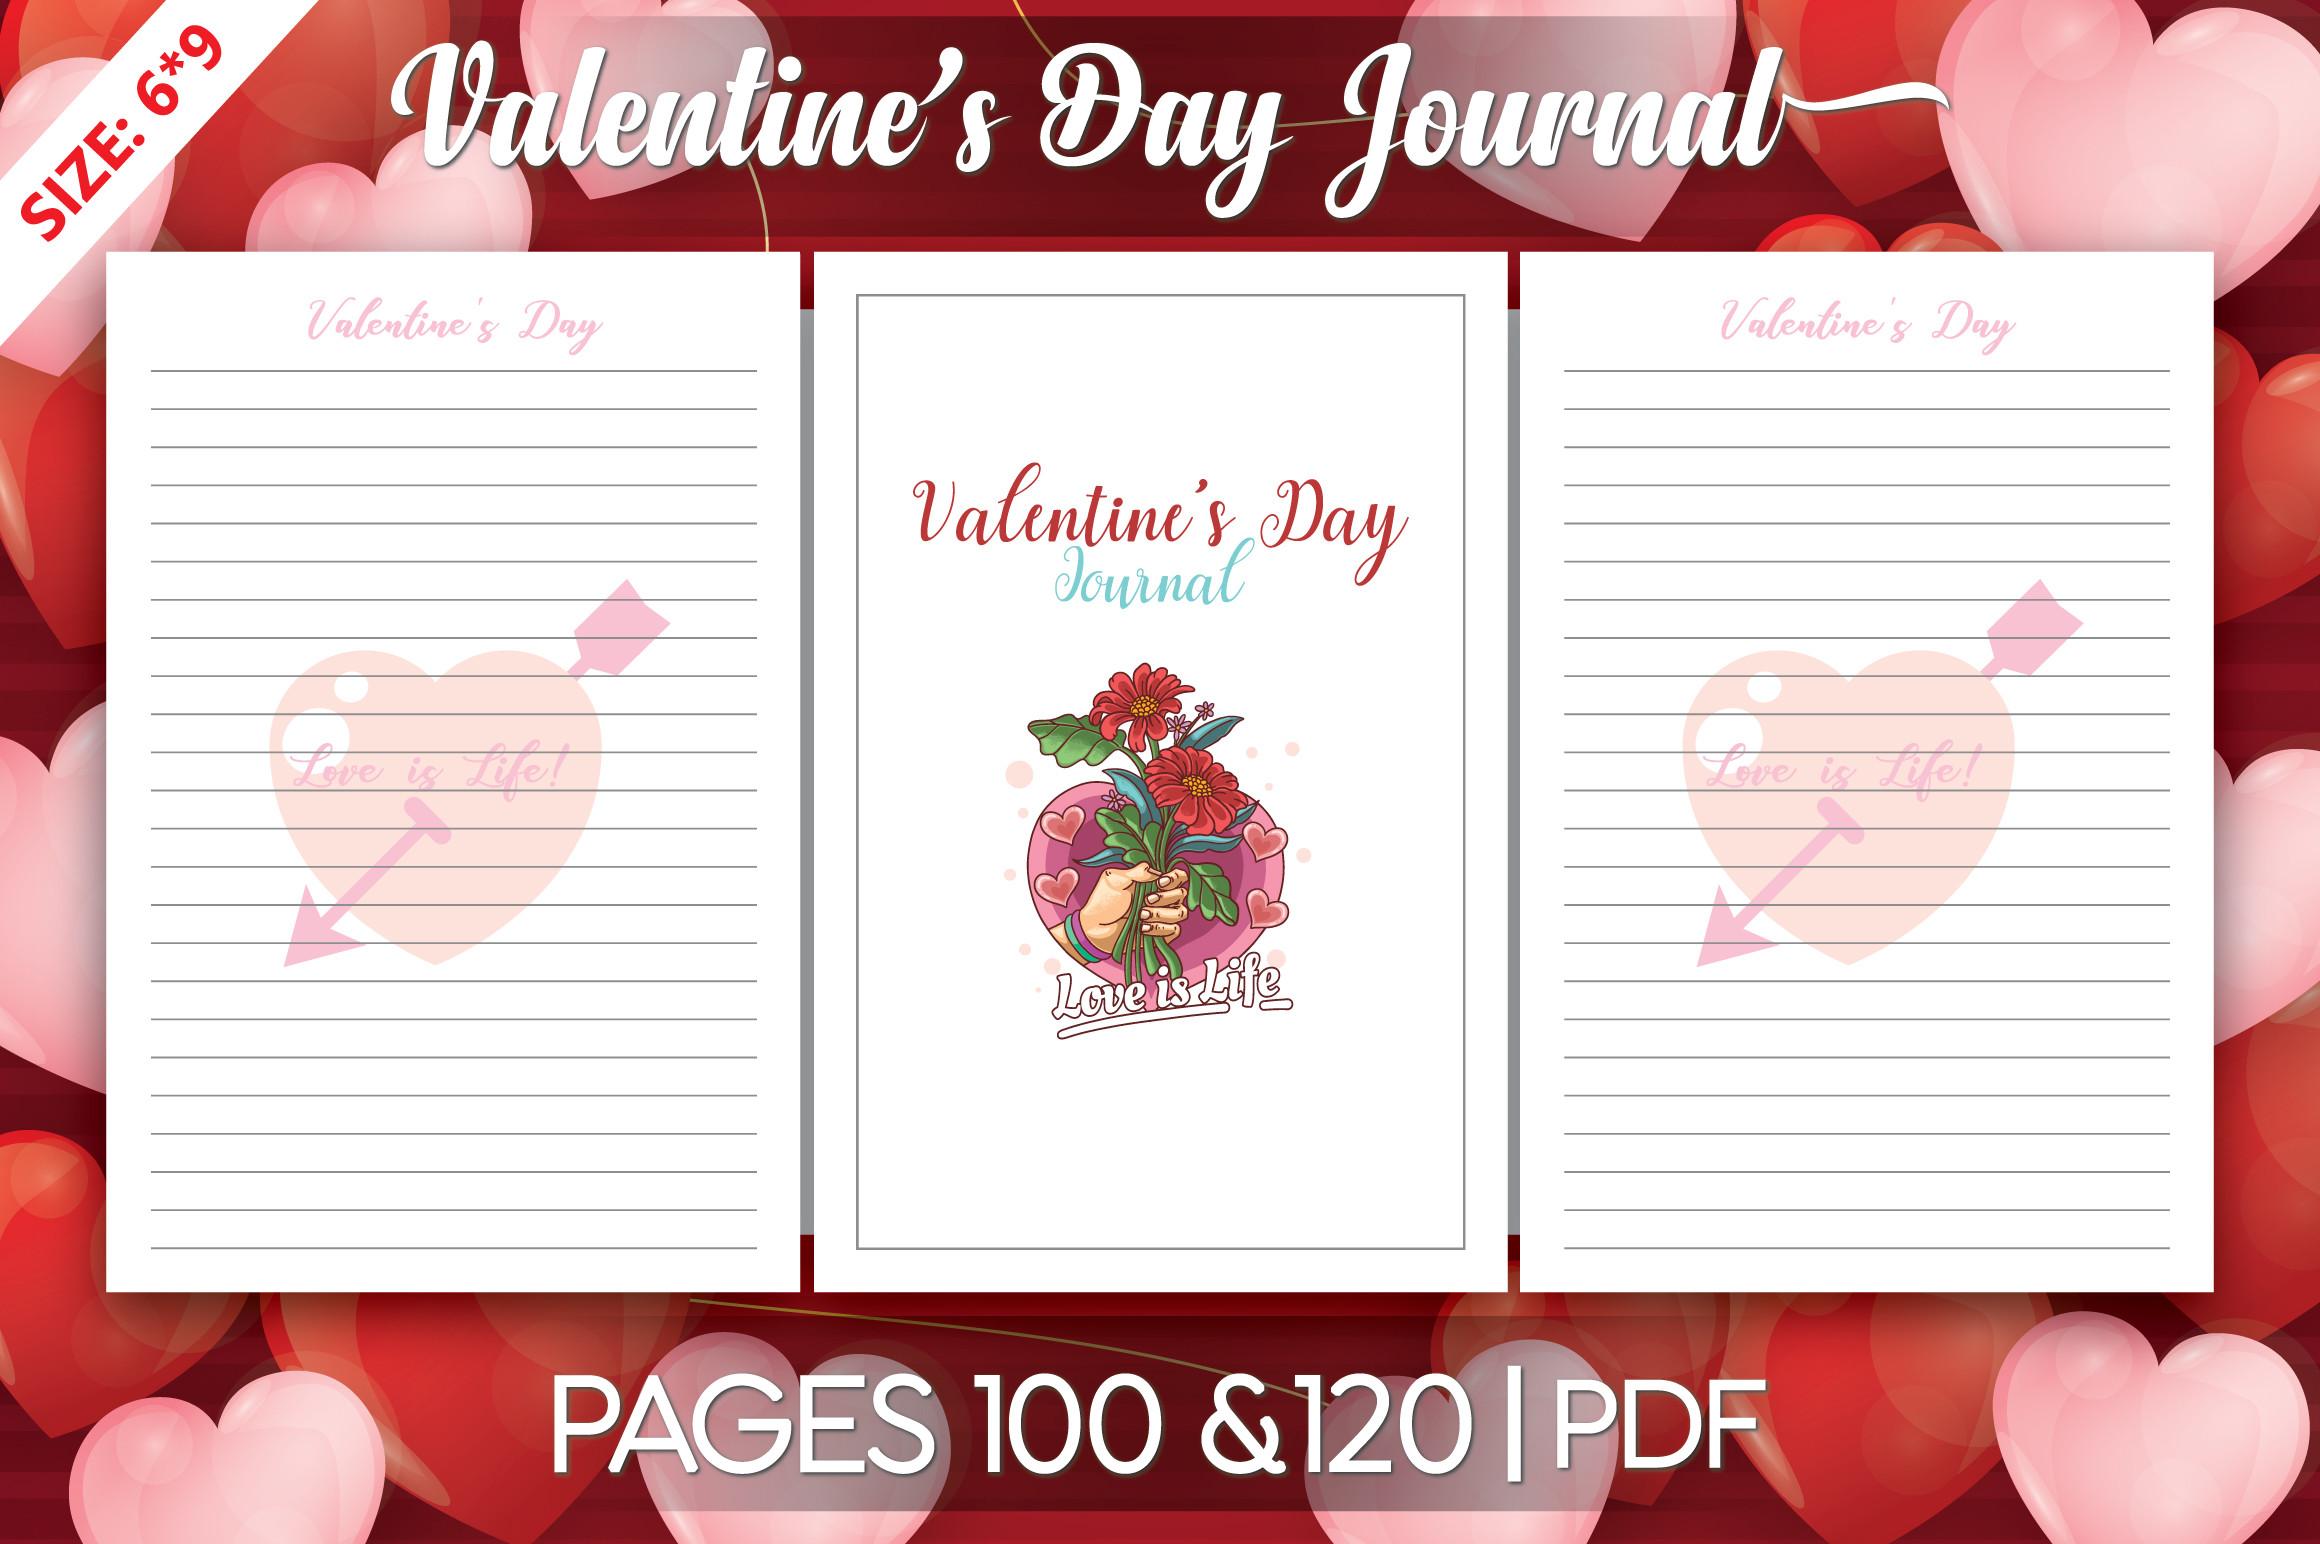 Valentine's Day Journal 2022 for KDP